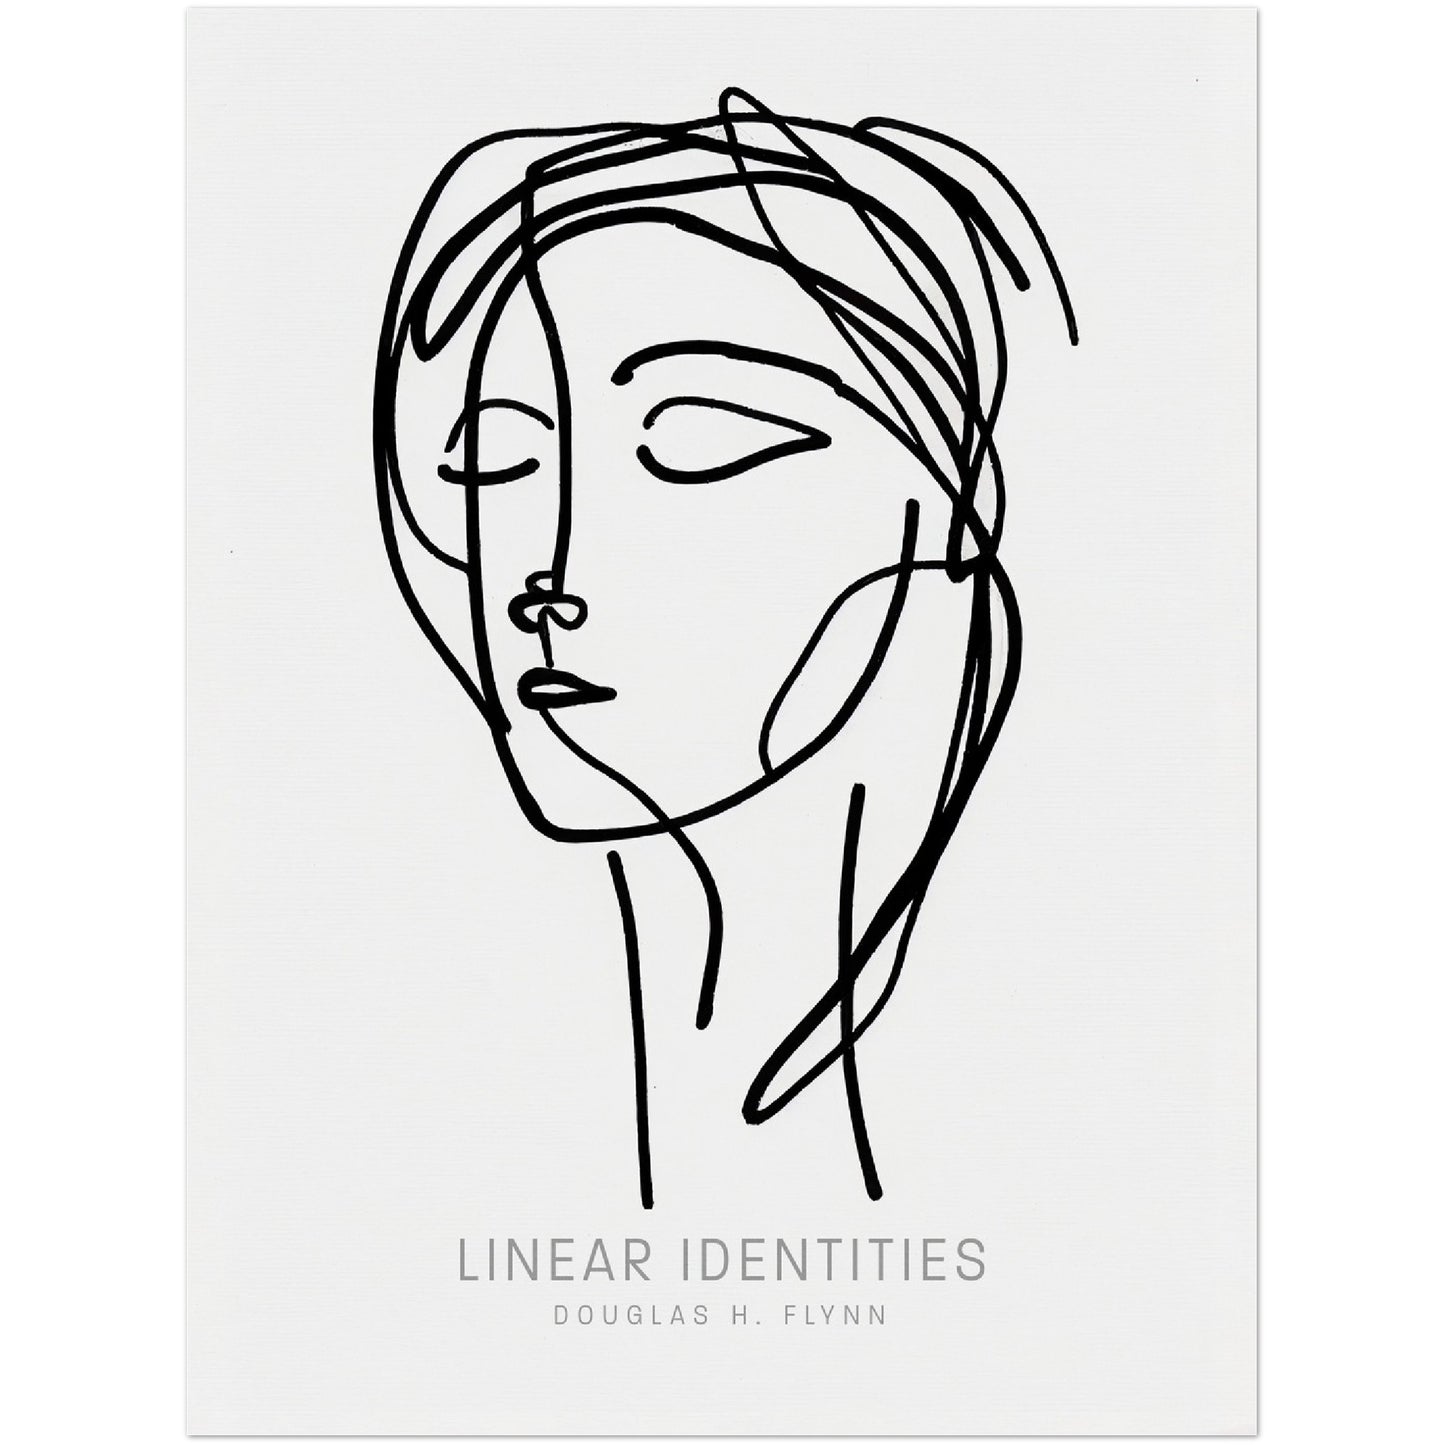 »LinearI dentities« merch poster